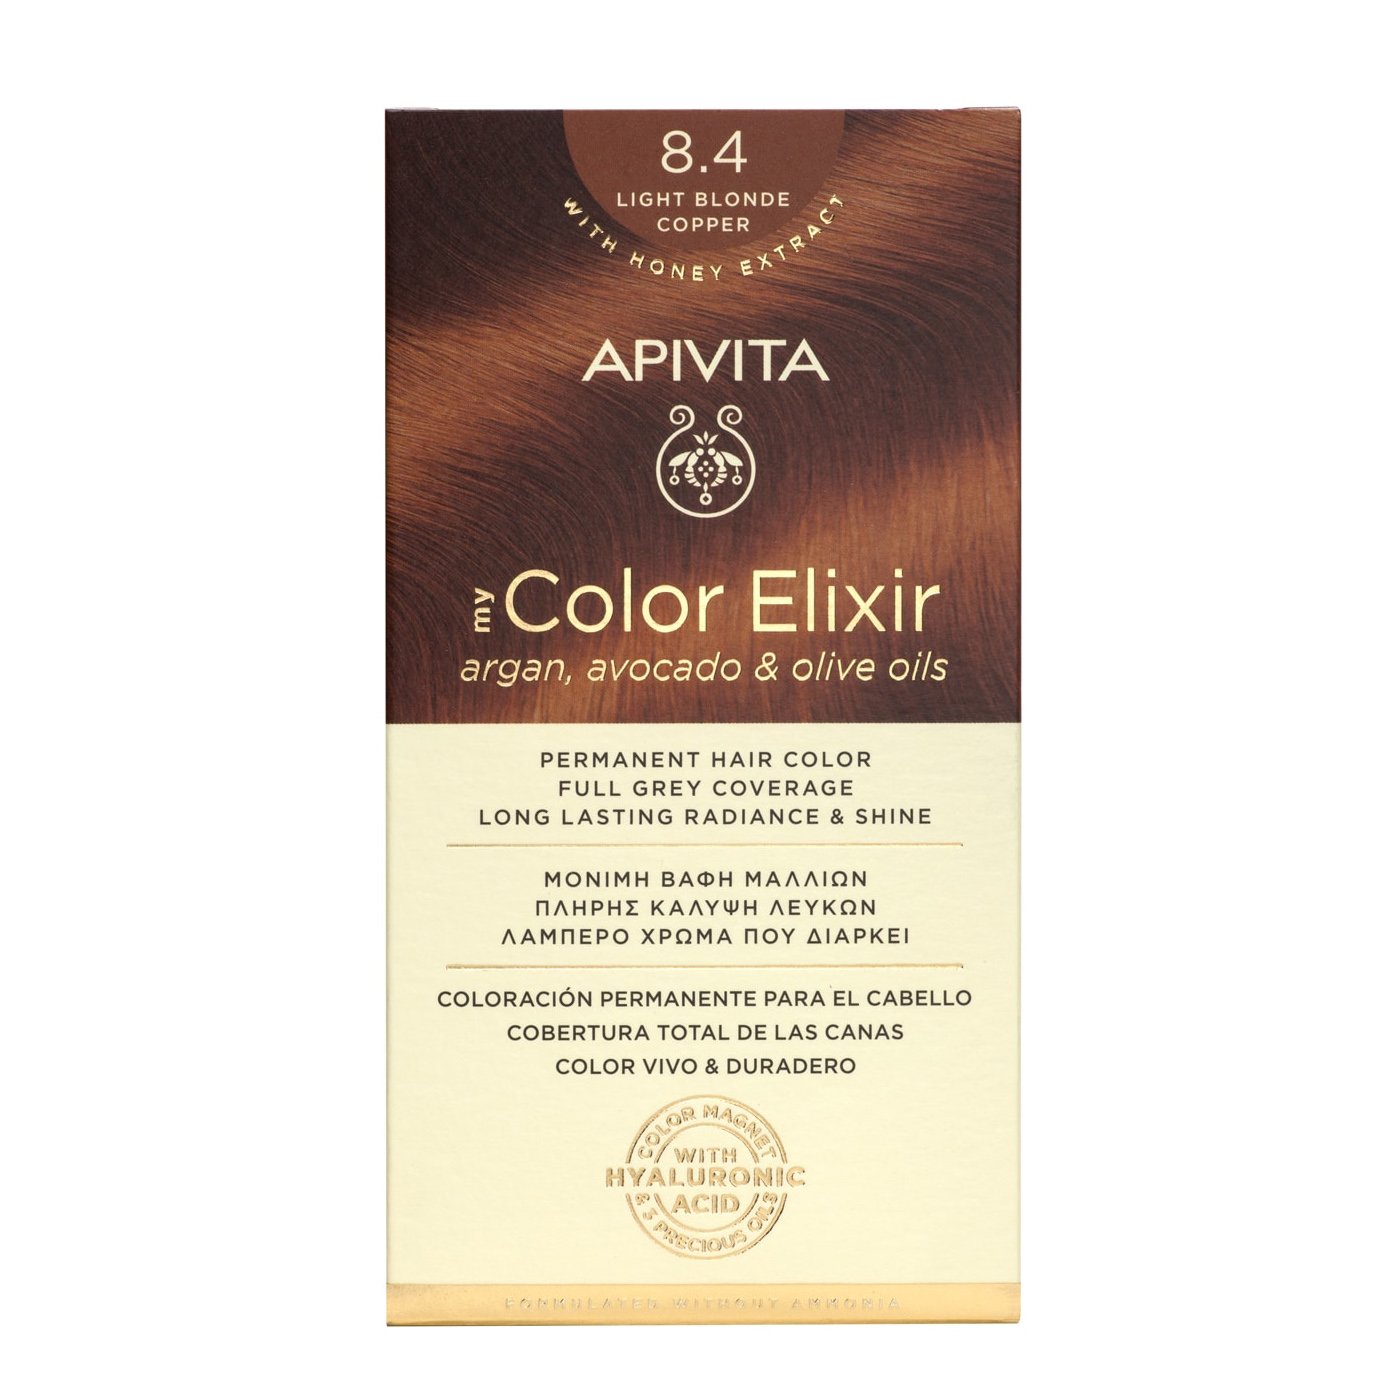 Apivita My Color Elixir Μόνιμη Βαφή Μαλλιών με Καινοτόμο Σύστημα Color Magnet που Σταθεροποιεί και Σφραγίζει το Χρώμα στην Τρίχα – Ν 8,4 ΞΑΝΘΟ ΑΝΟΙΧΤΟ ΧΑΛΚΙΝΟ